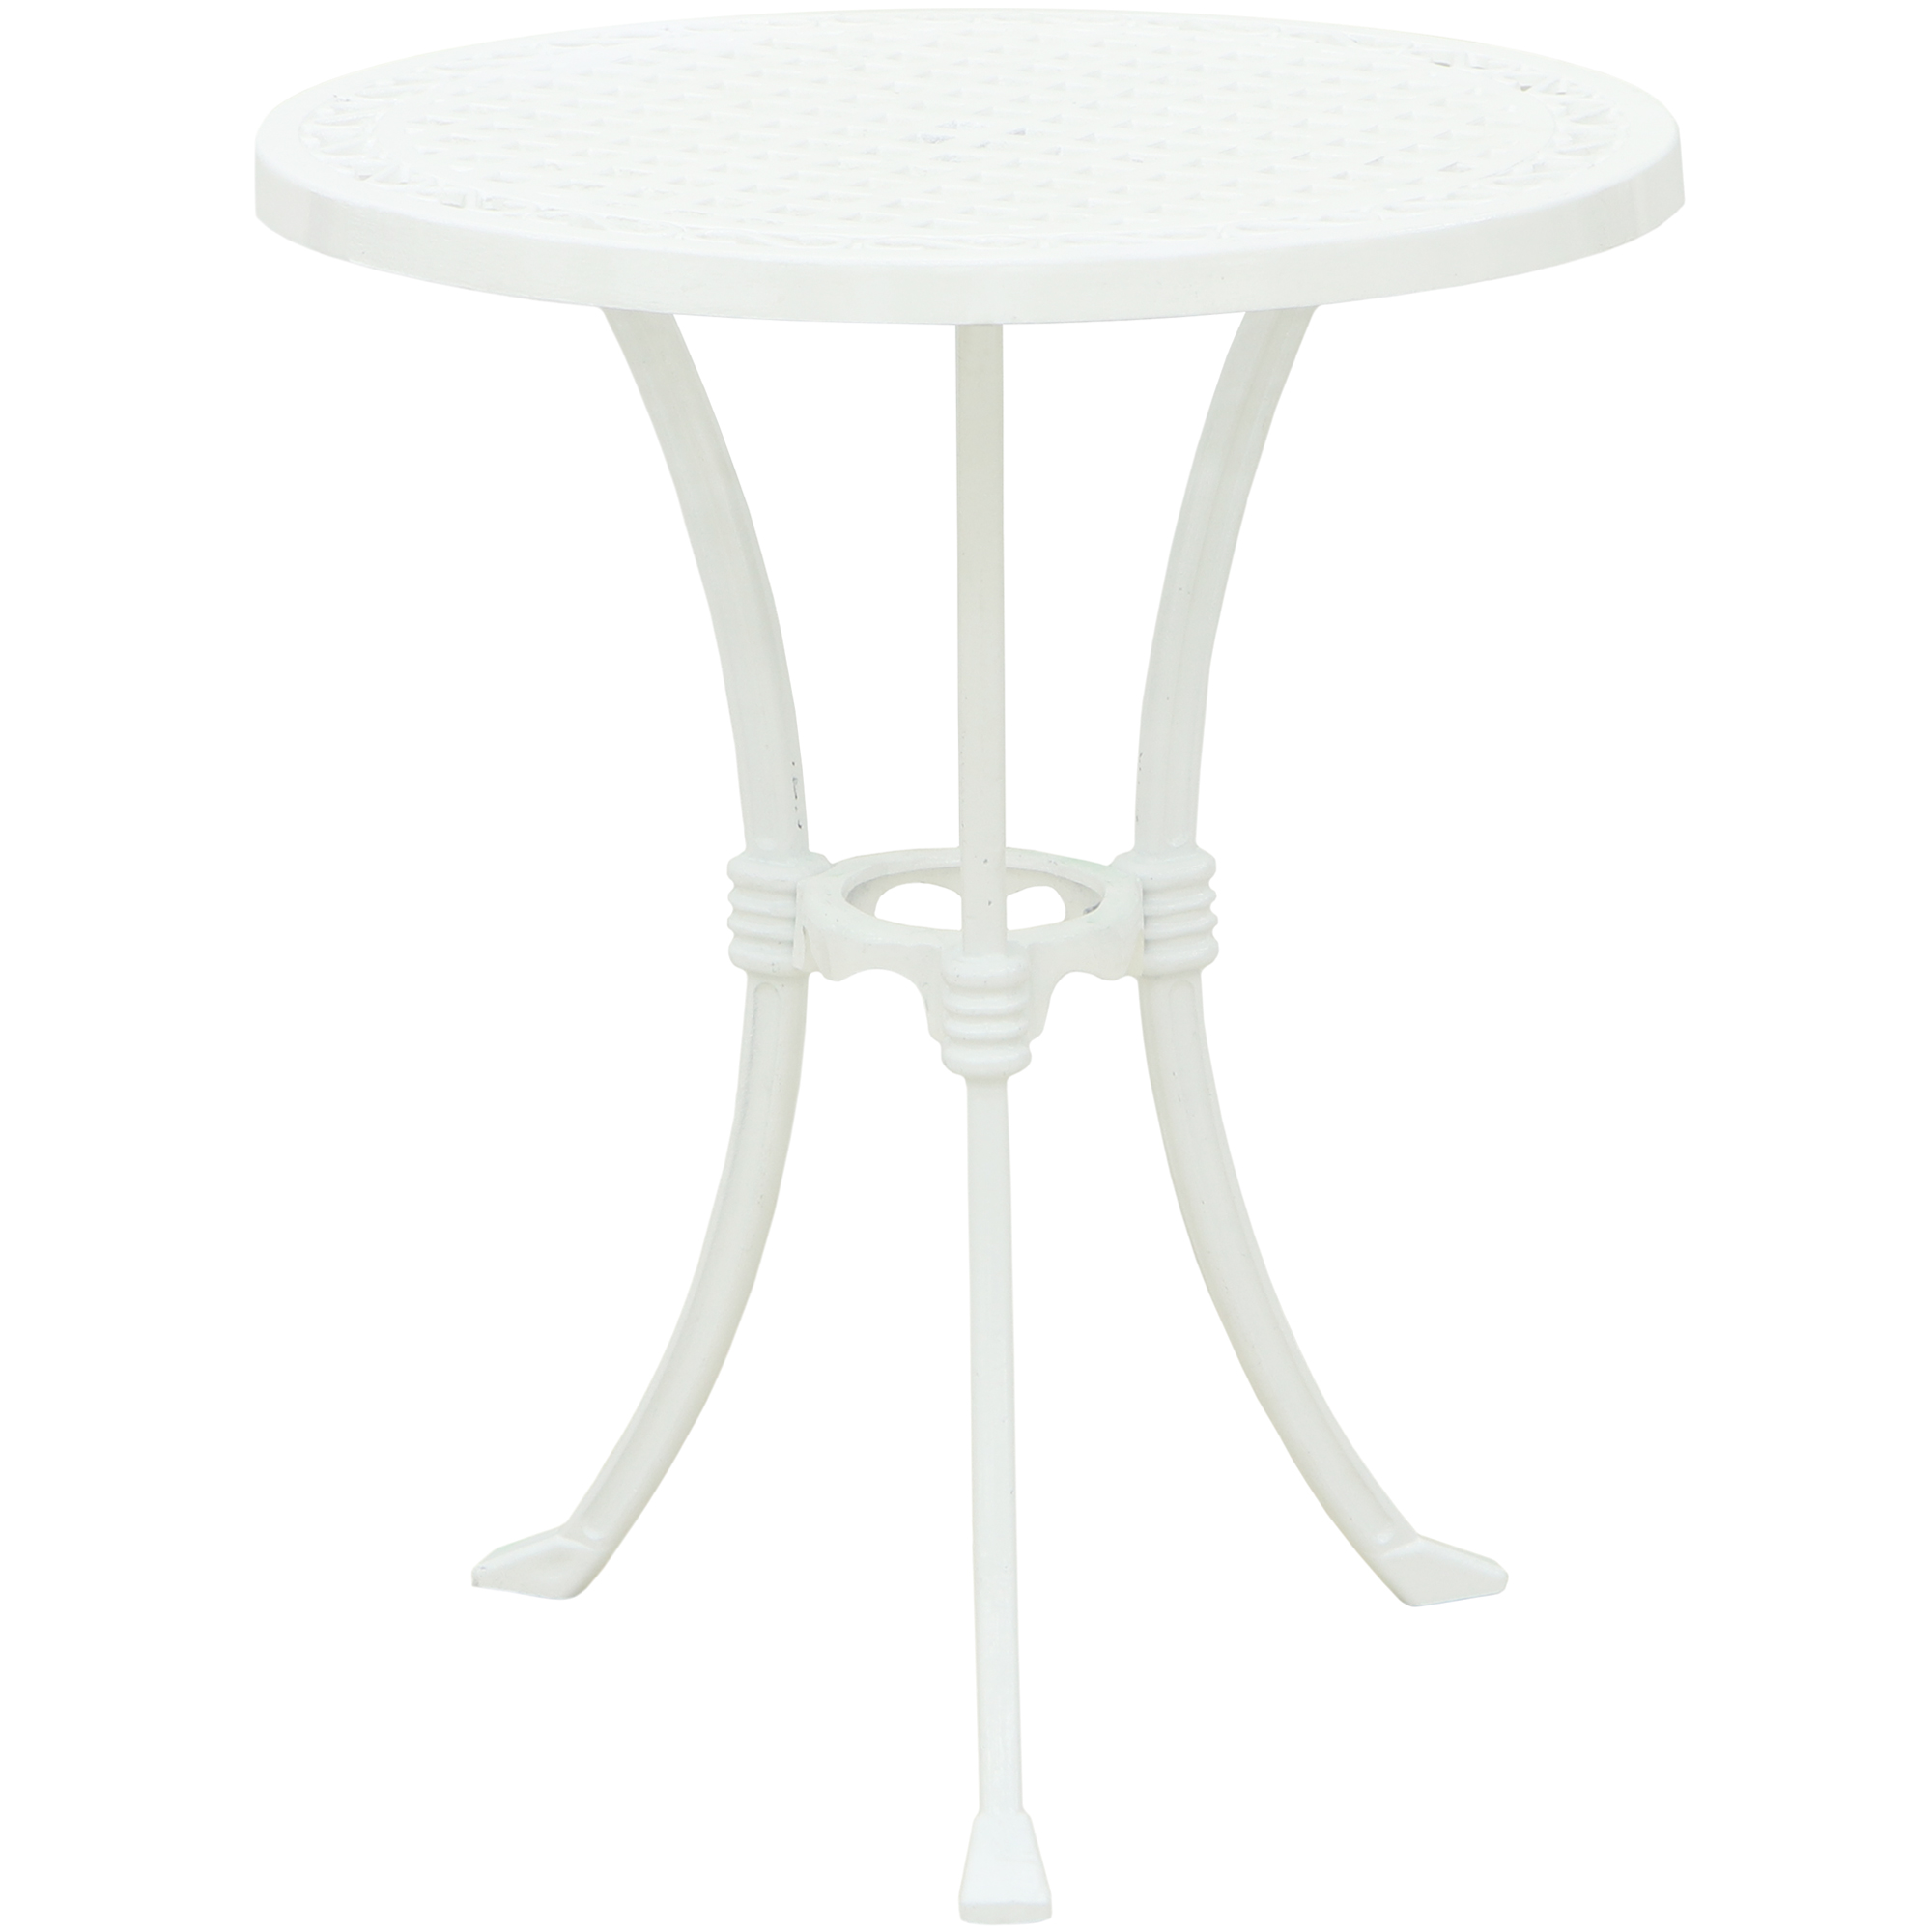 Комплект мебели  Lofa bistro 3 предмета, цвет белый, размер 52х40х89 см - фото 2